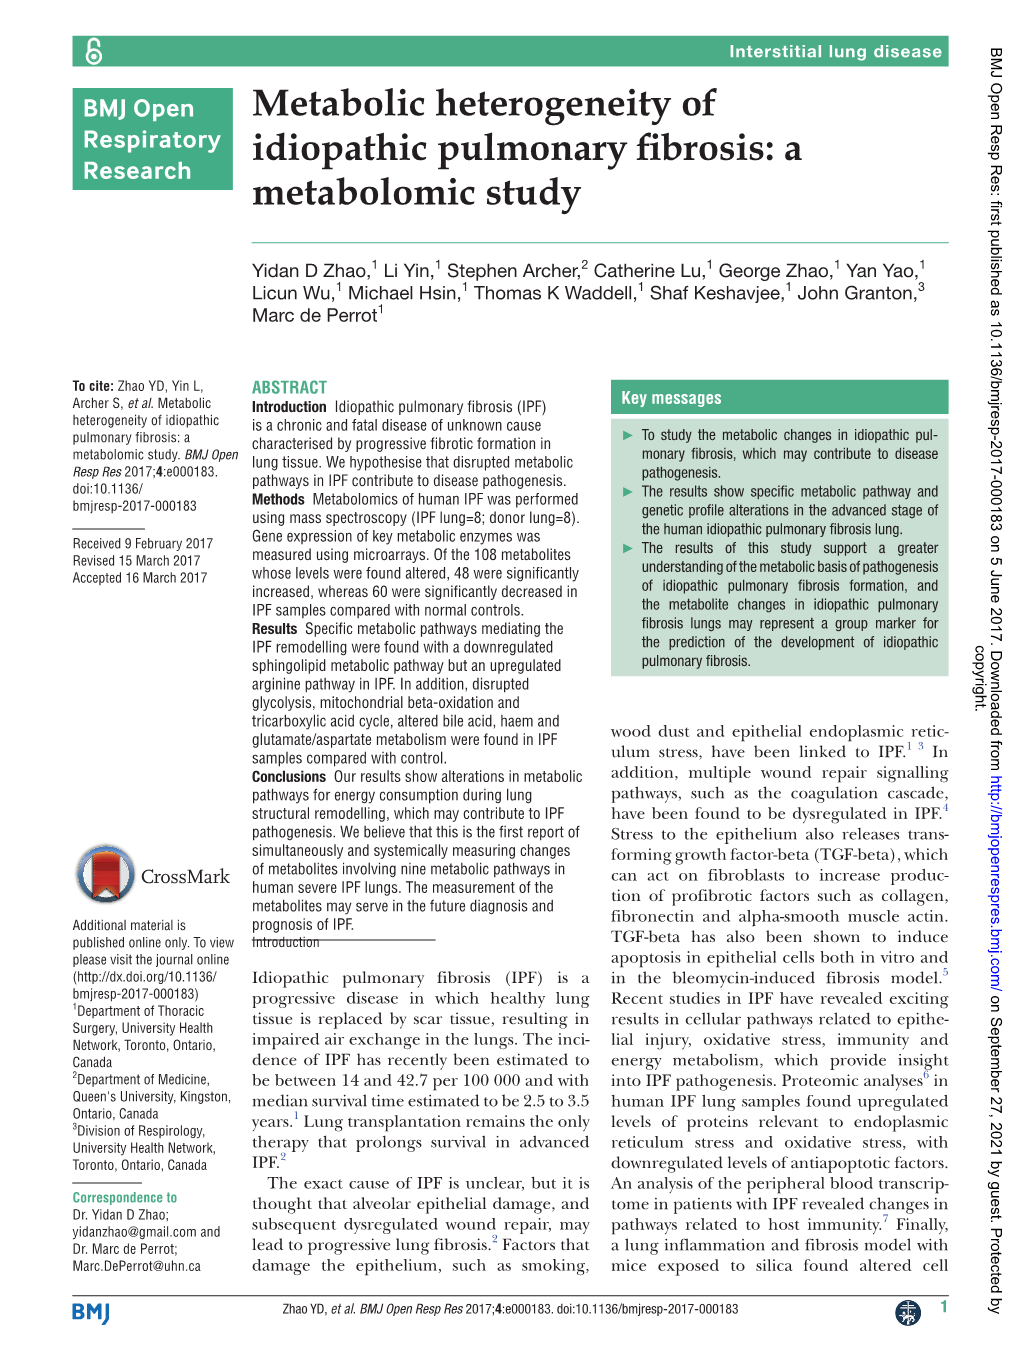 Metabolic Heterogeneity of Idiopathic Pulmonary Fibrosis: a Metabolomic Study